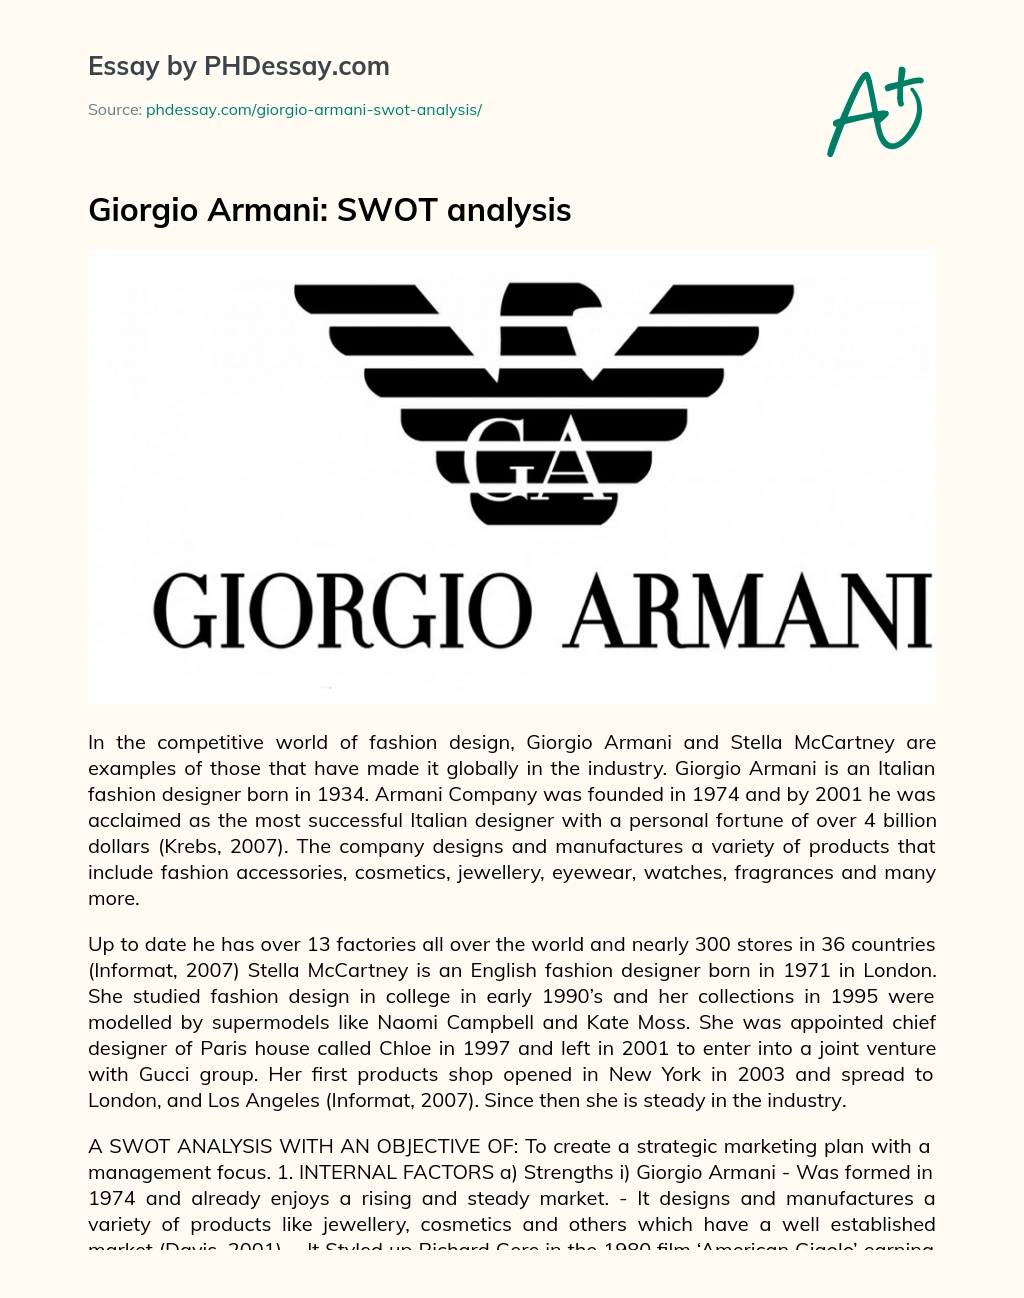 Giorgio Armani: SWOT Analysis essay